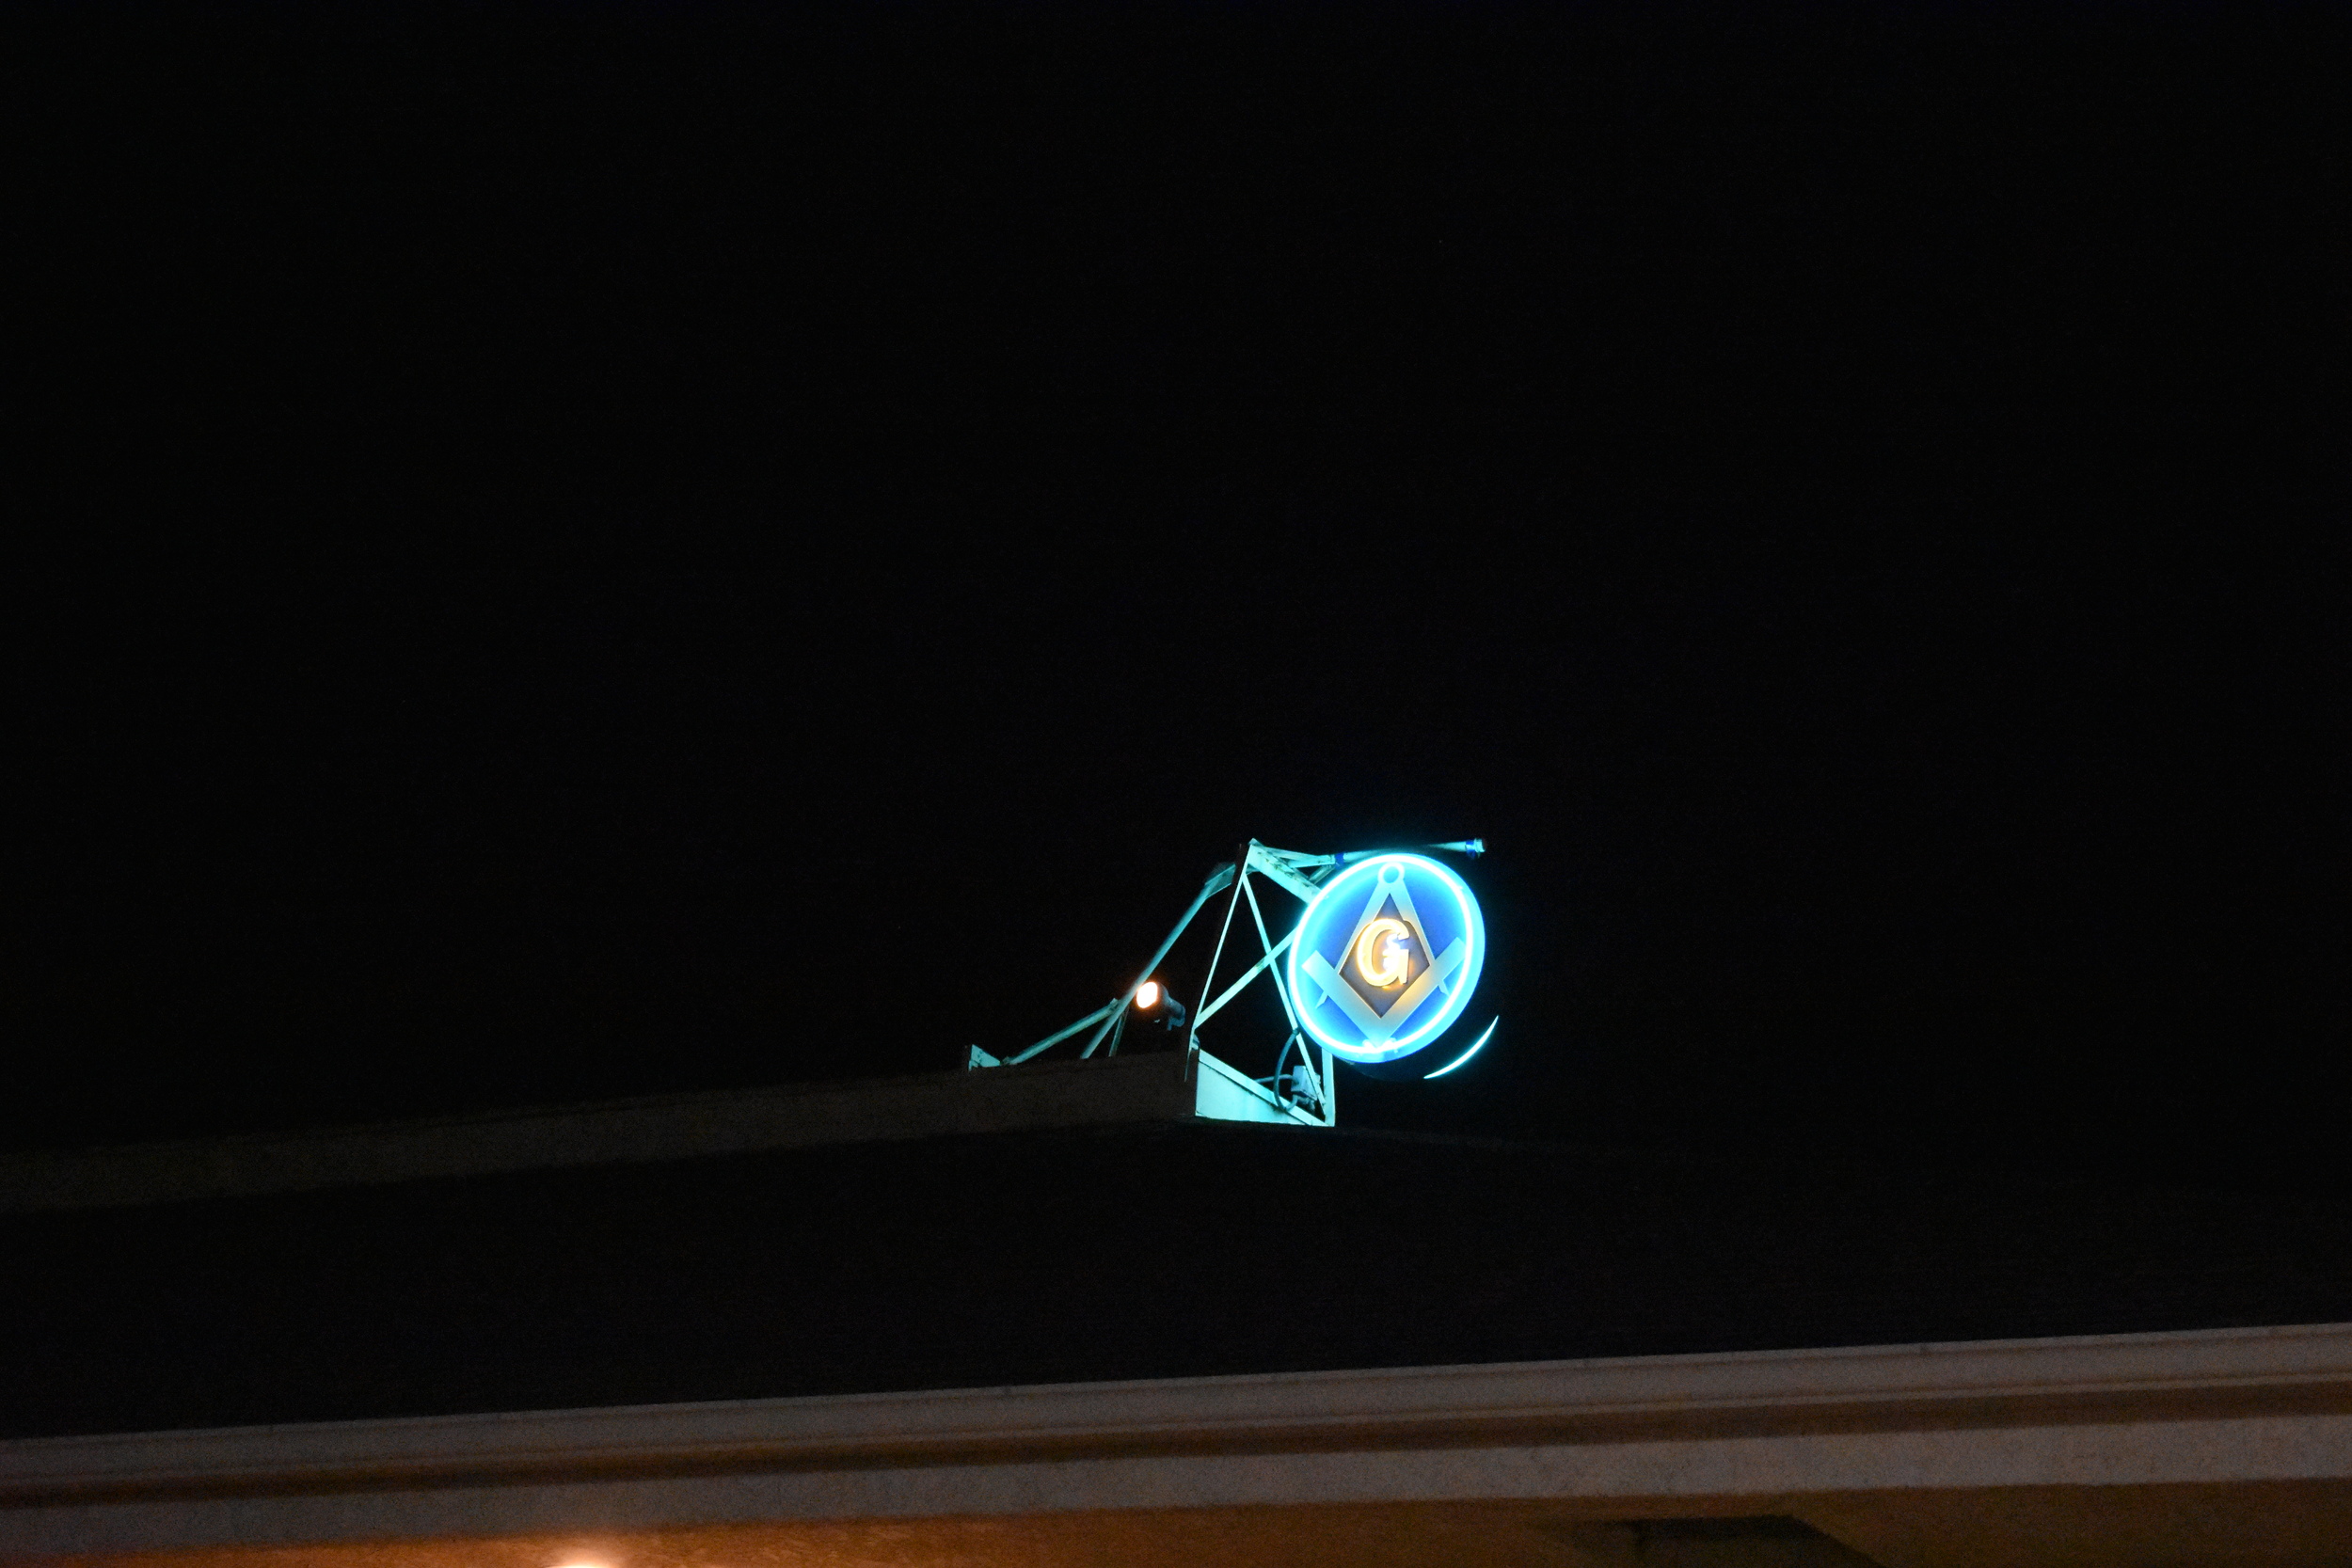 Masonic Lodge roof mounted sign, Reno, Nevada